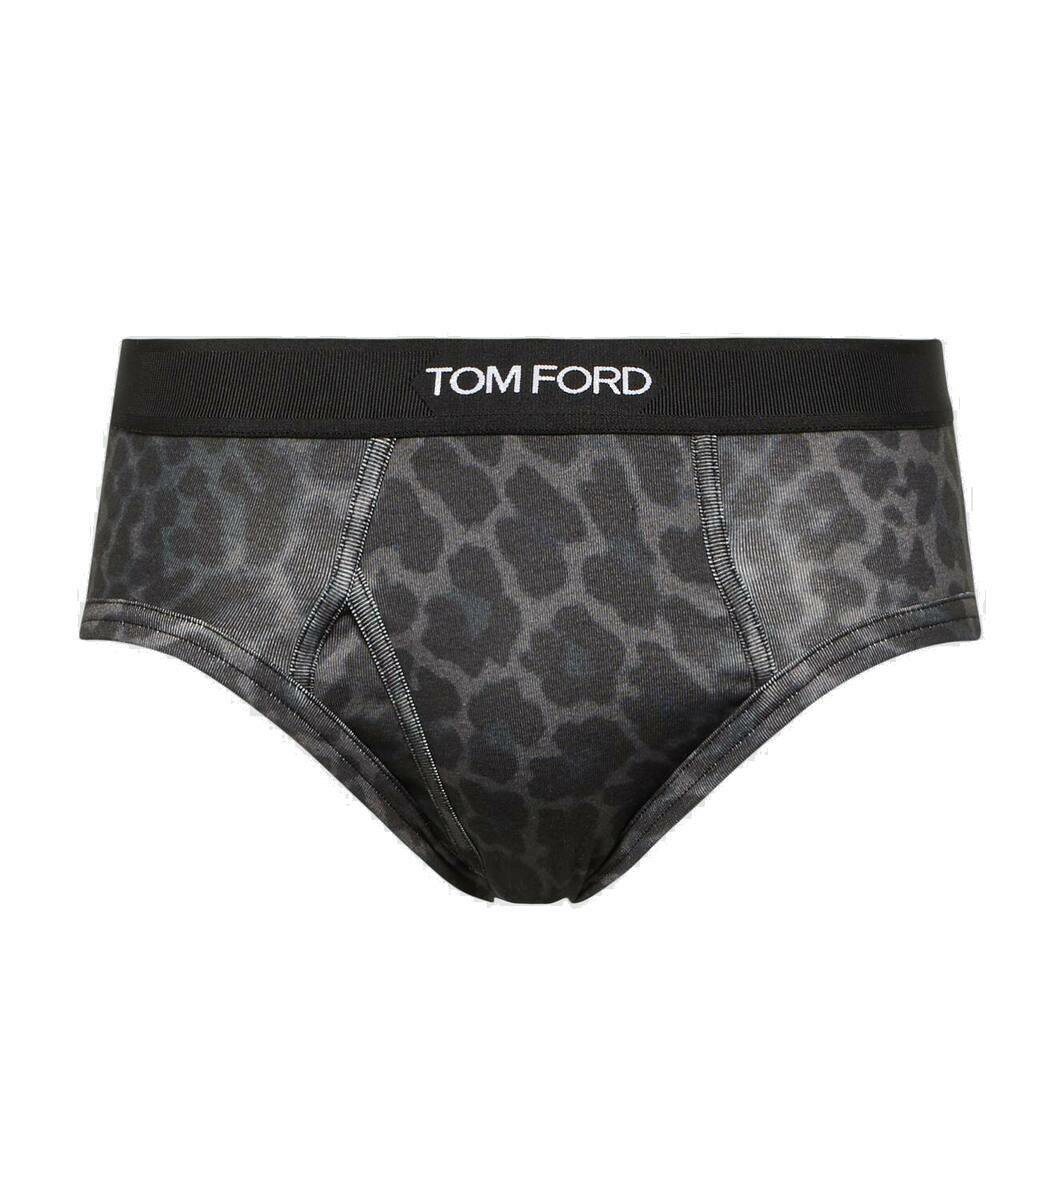 Tom Ford Leopard-print cotton-blend boxer briefs TOM FORD